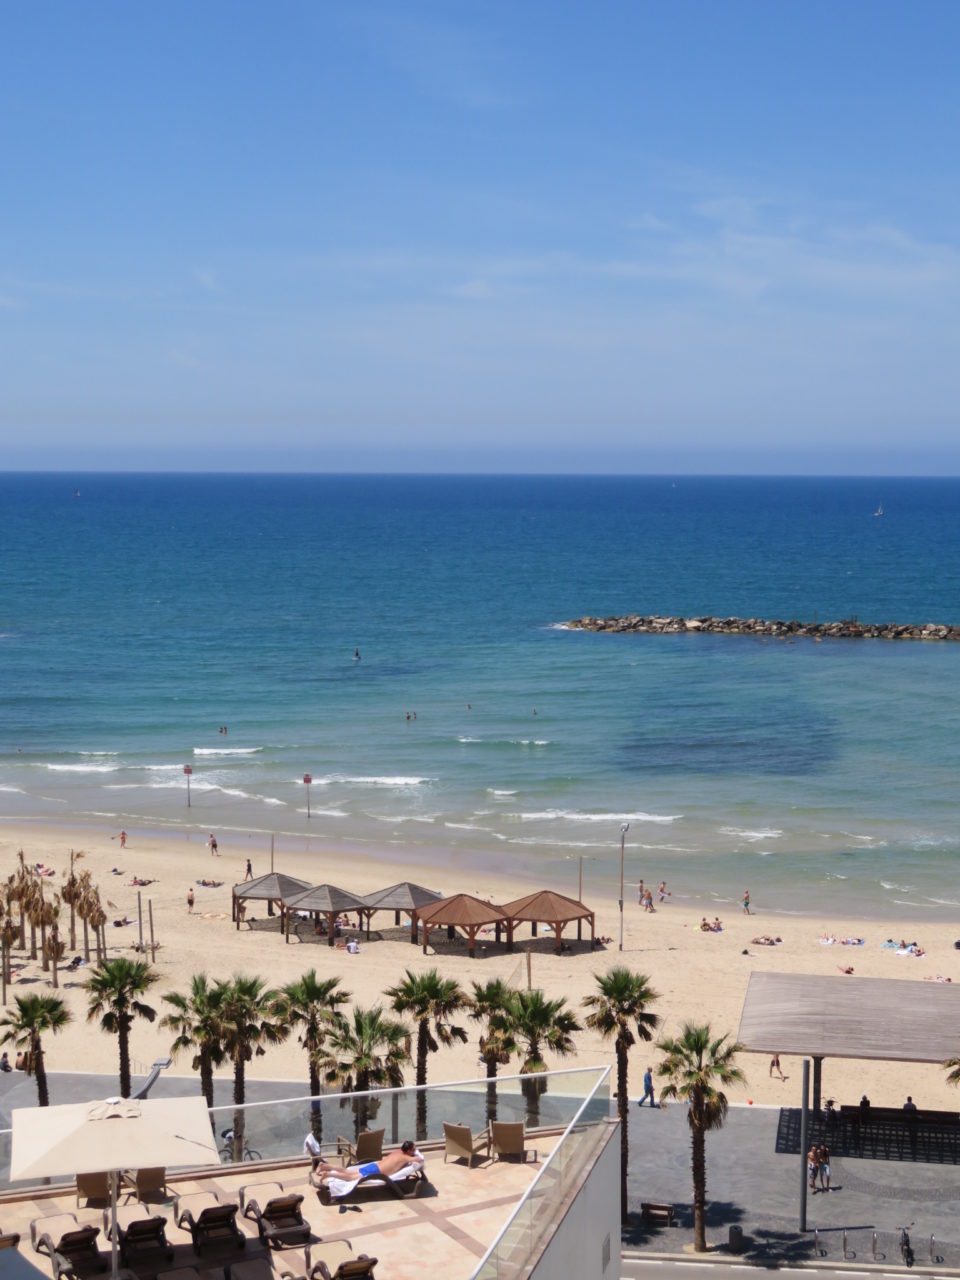 Vacationing in Israel ... The Tel Aviv Beach viewed from the Dan Tel Aviv Hotel